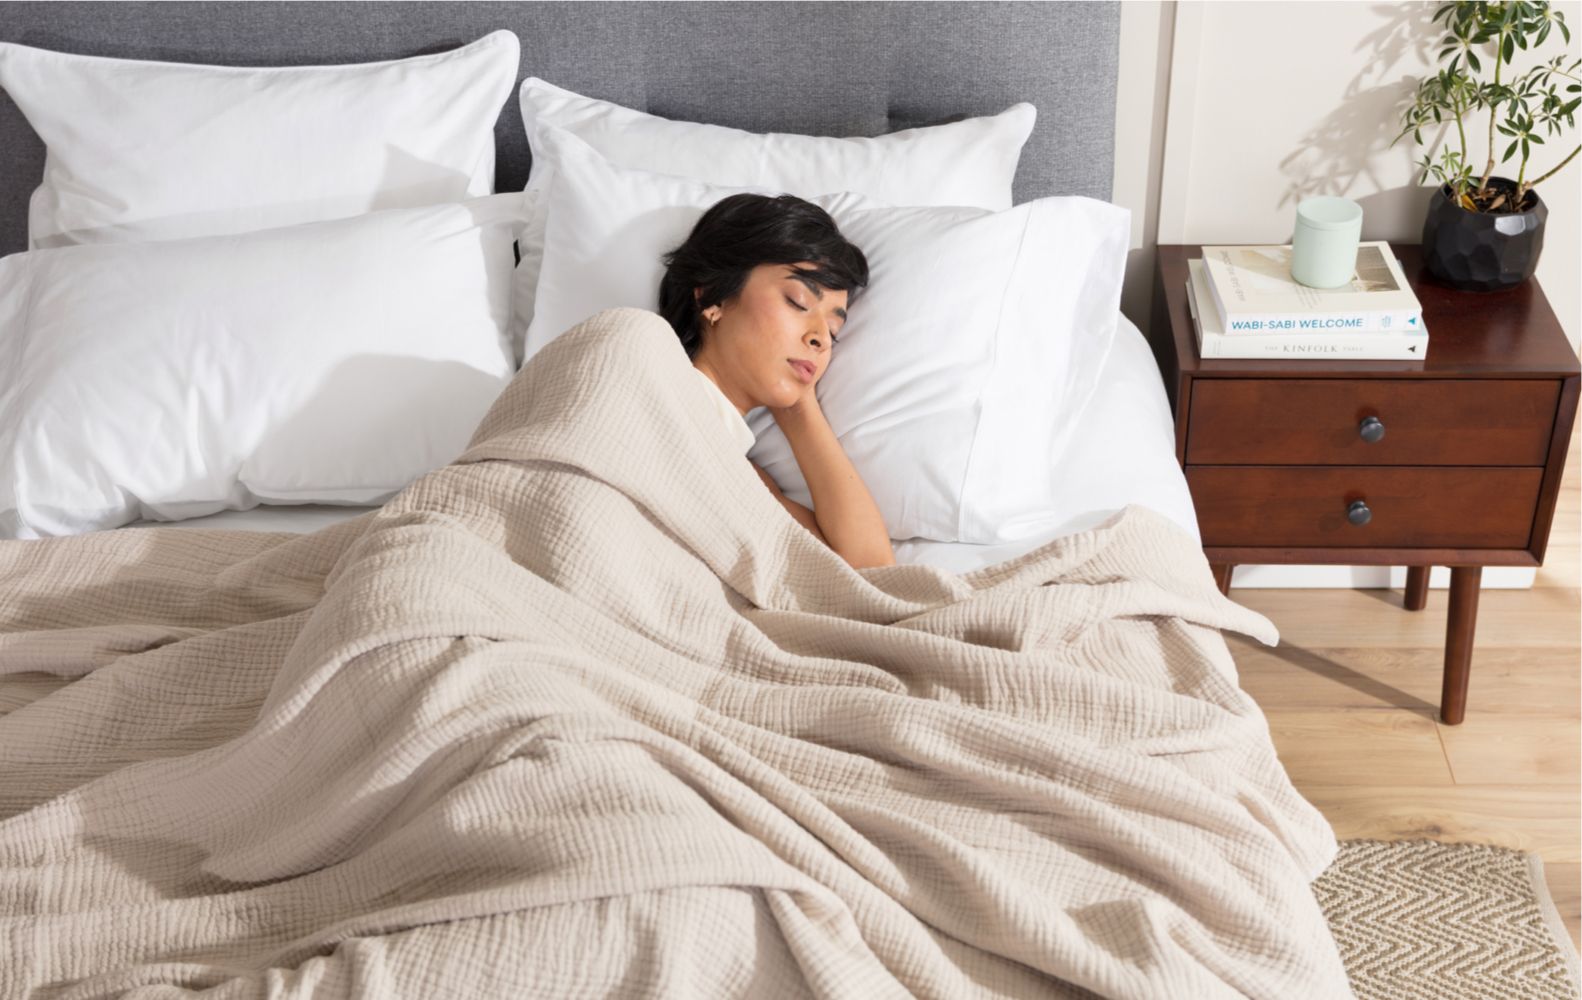 Person sleeping restfully on an endy foam mattress and pillows under a muslin blanket